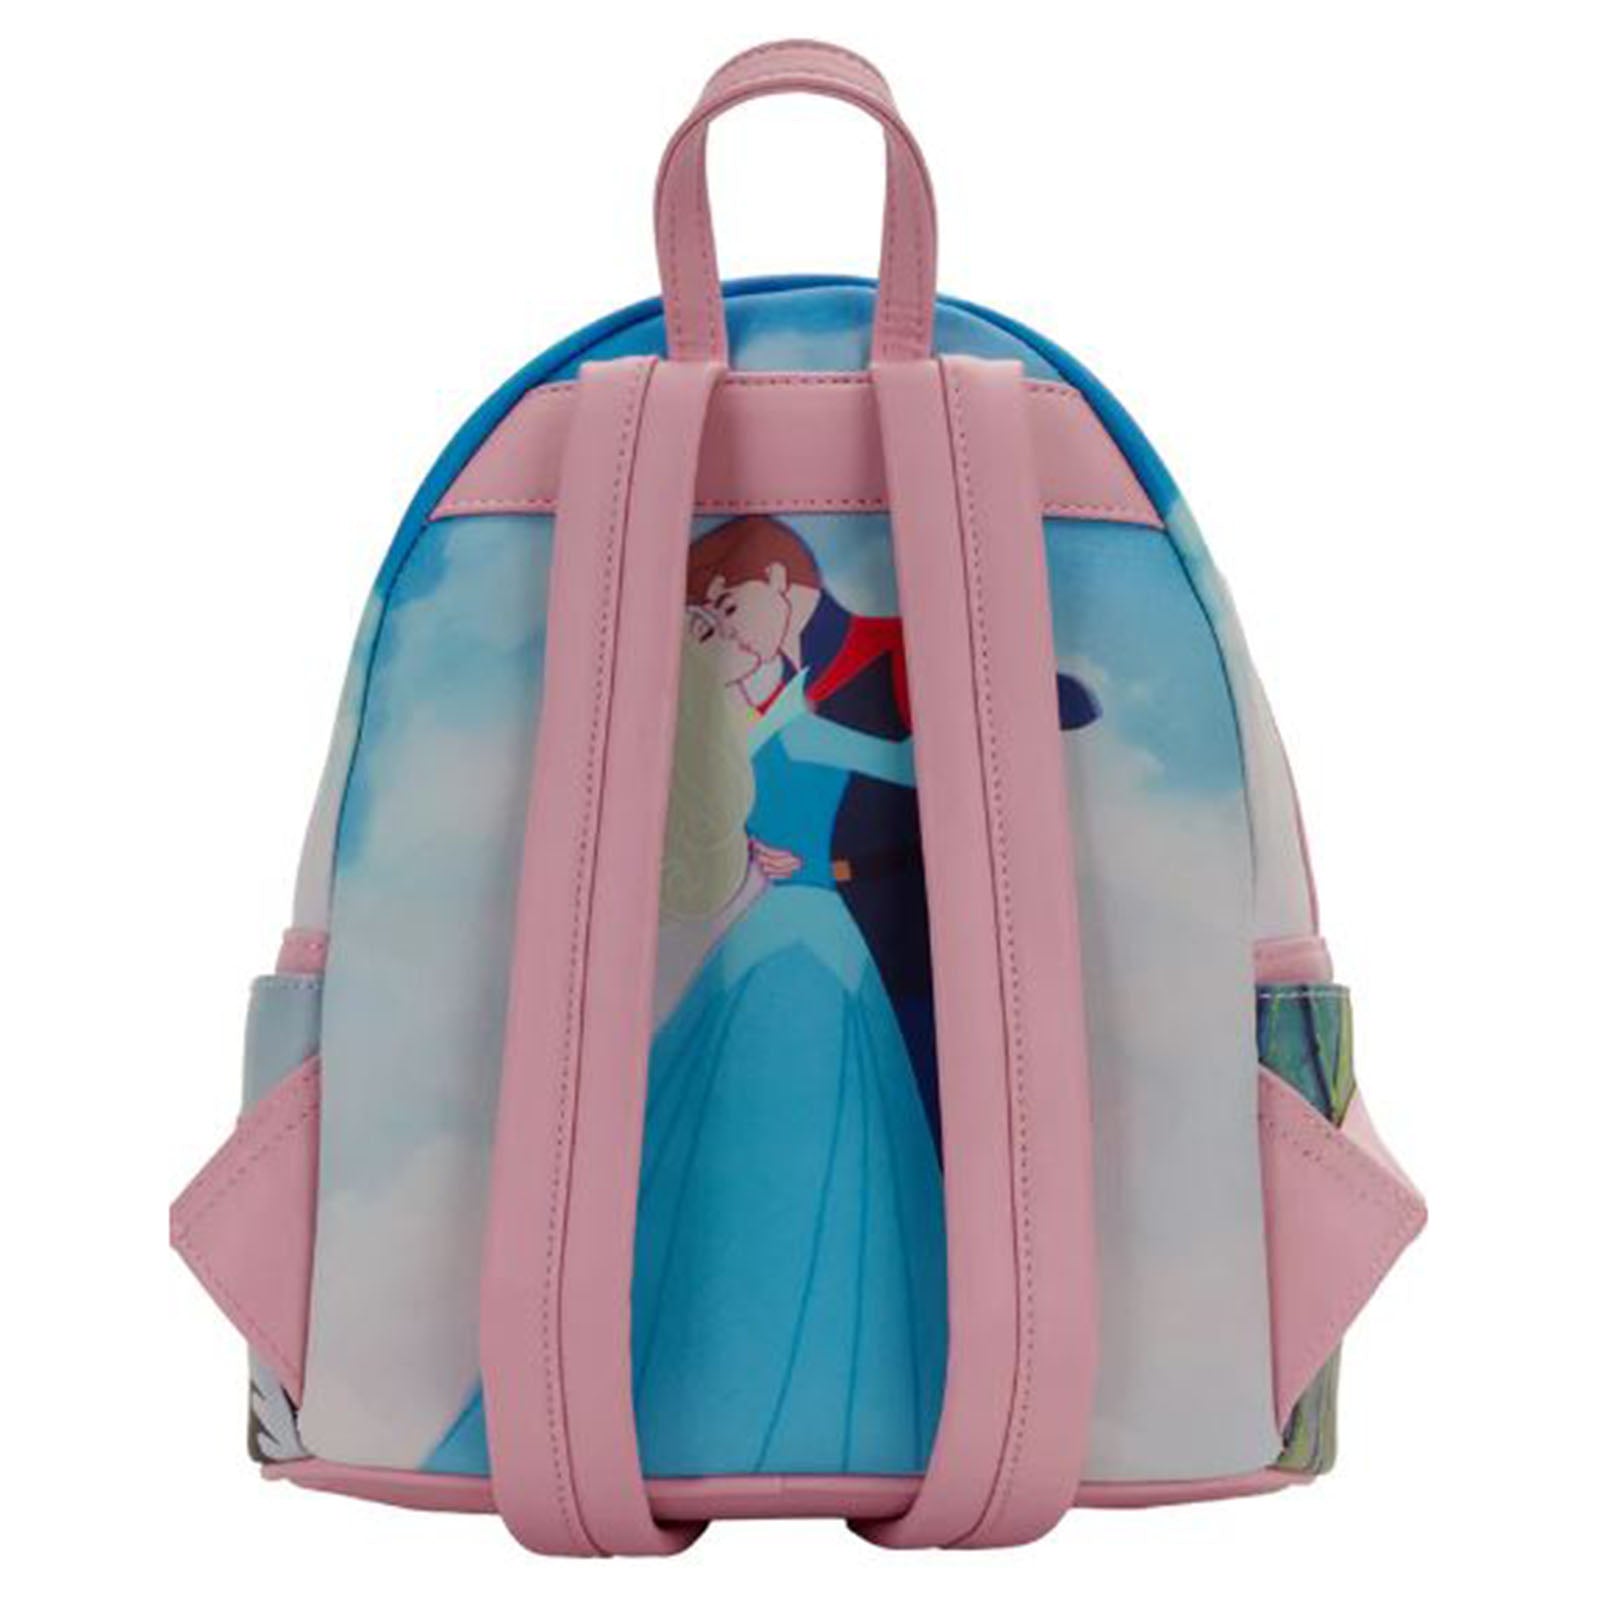 Loungefly Disney Sleeping Beauty Princess Lenticular Series Mini Backpack